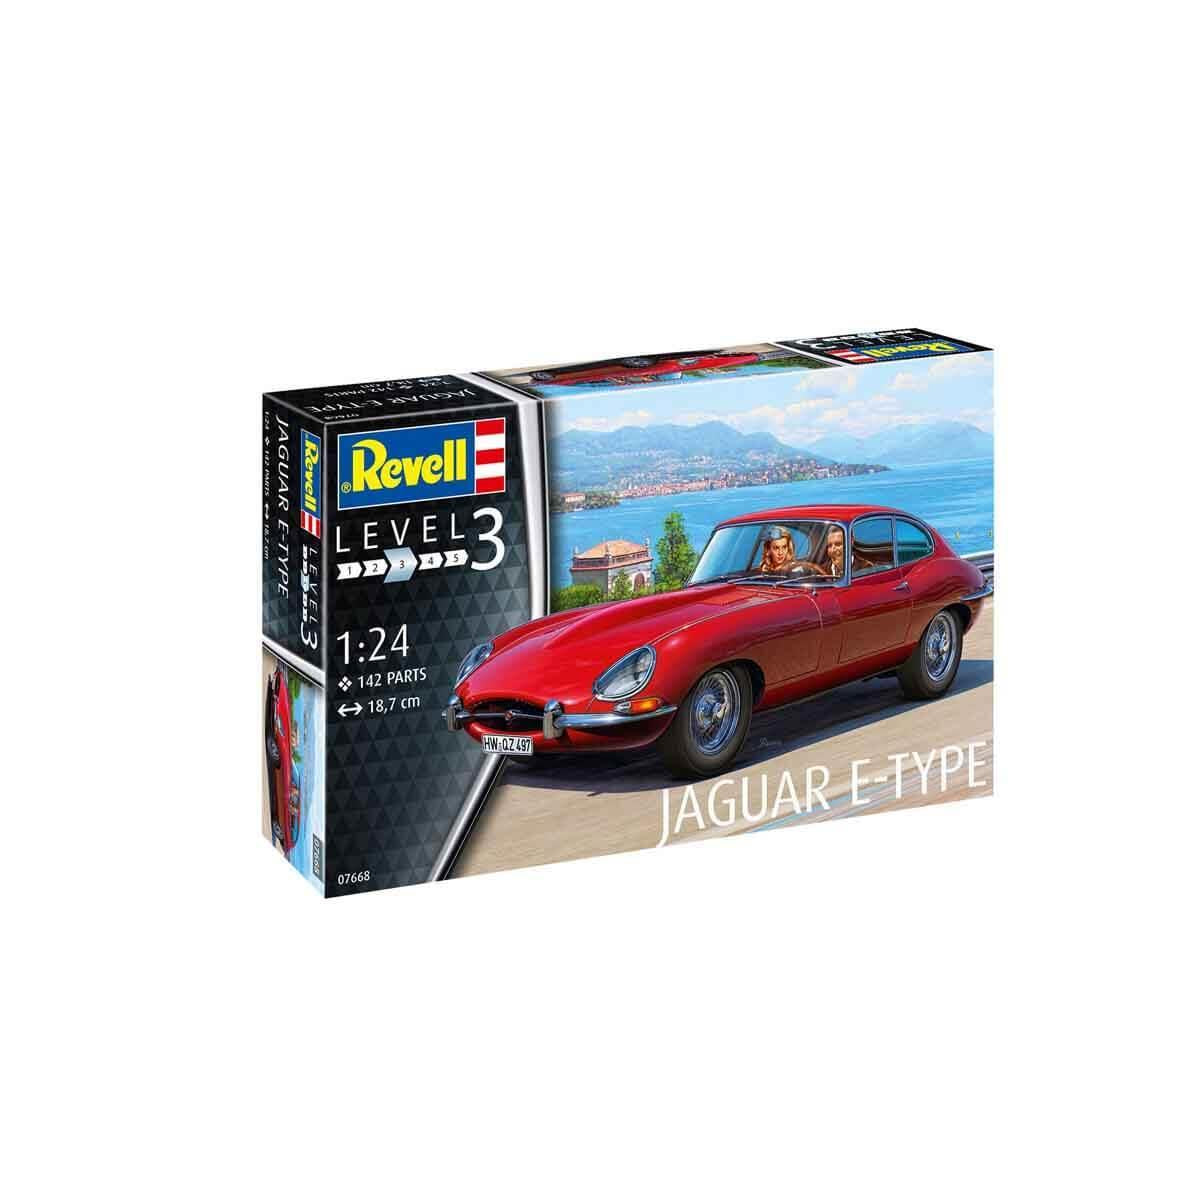 Revell 1:24 Jaguar E Type Coupe Model Kit 07668 | Toysall